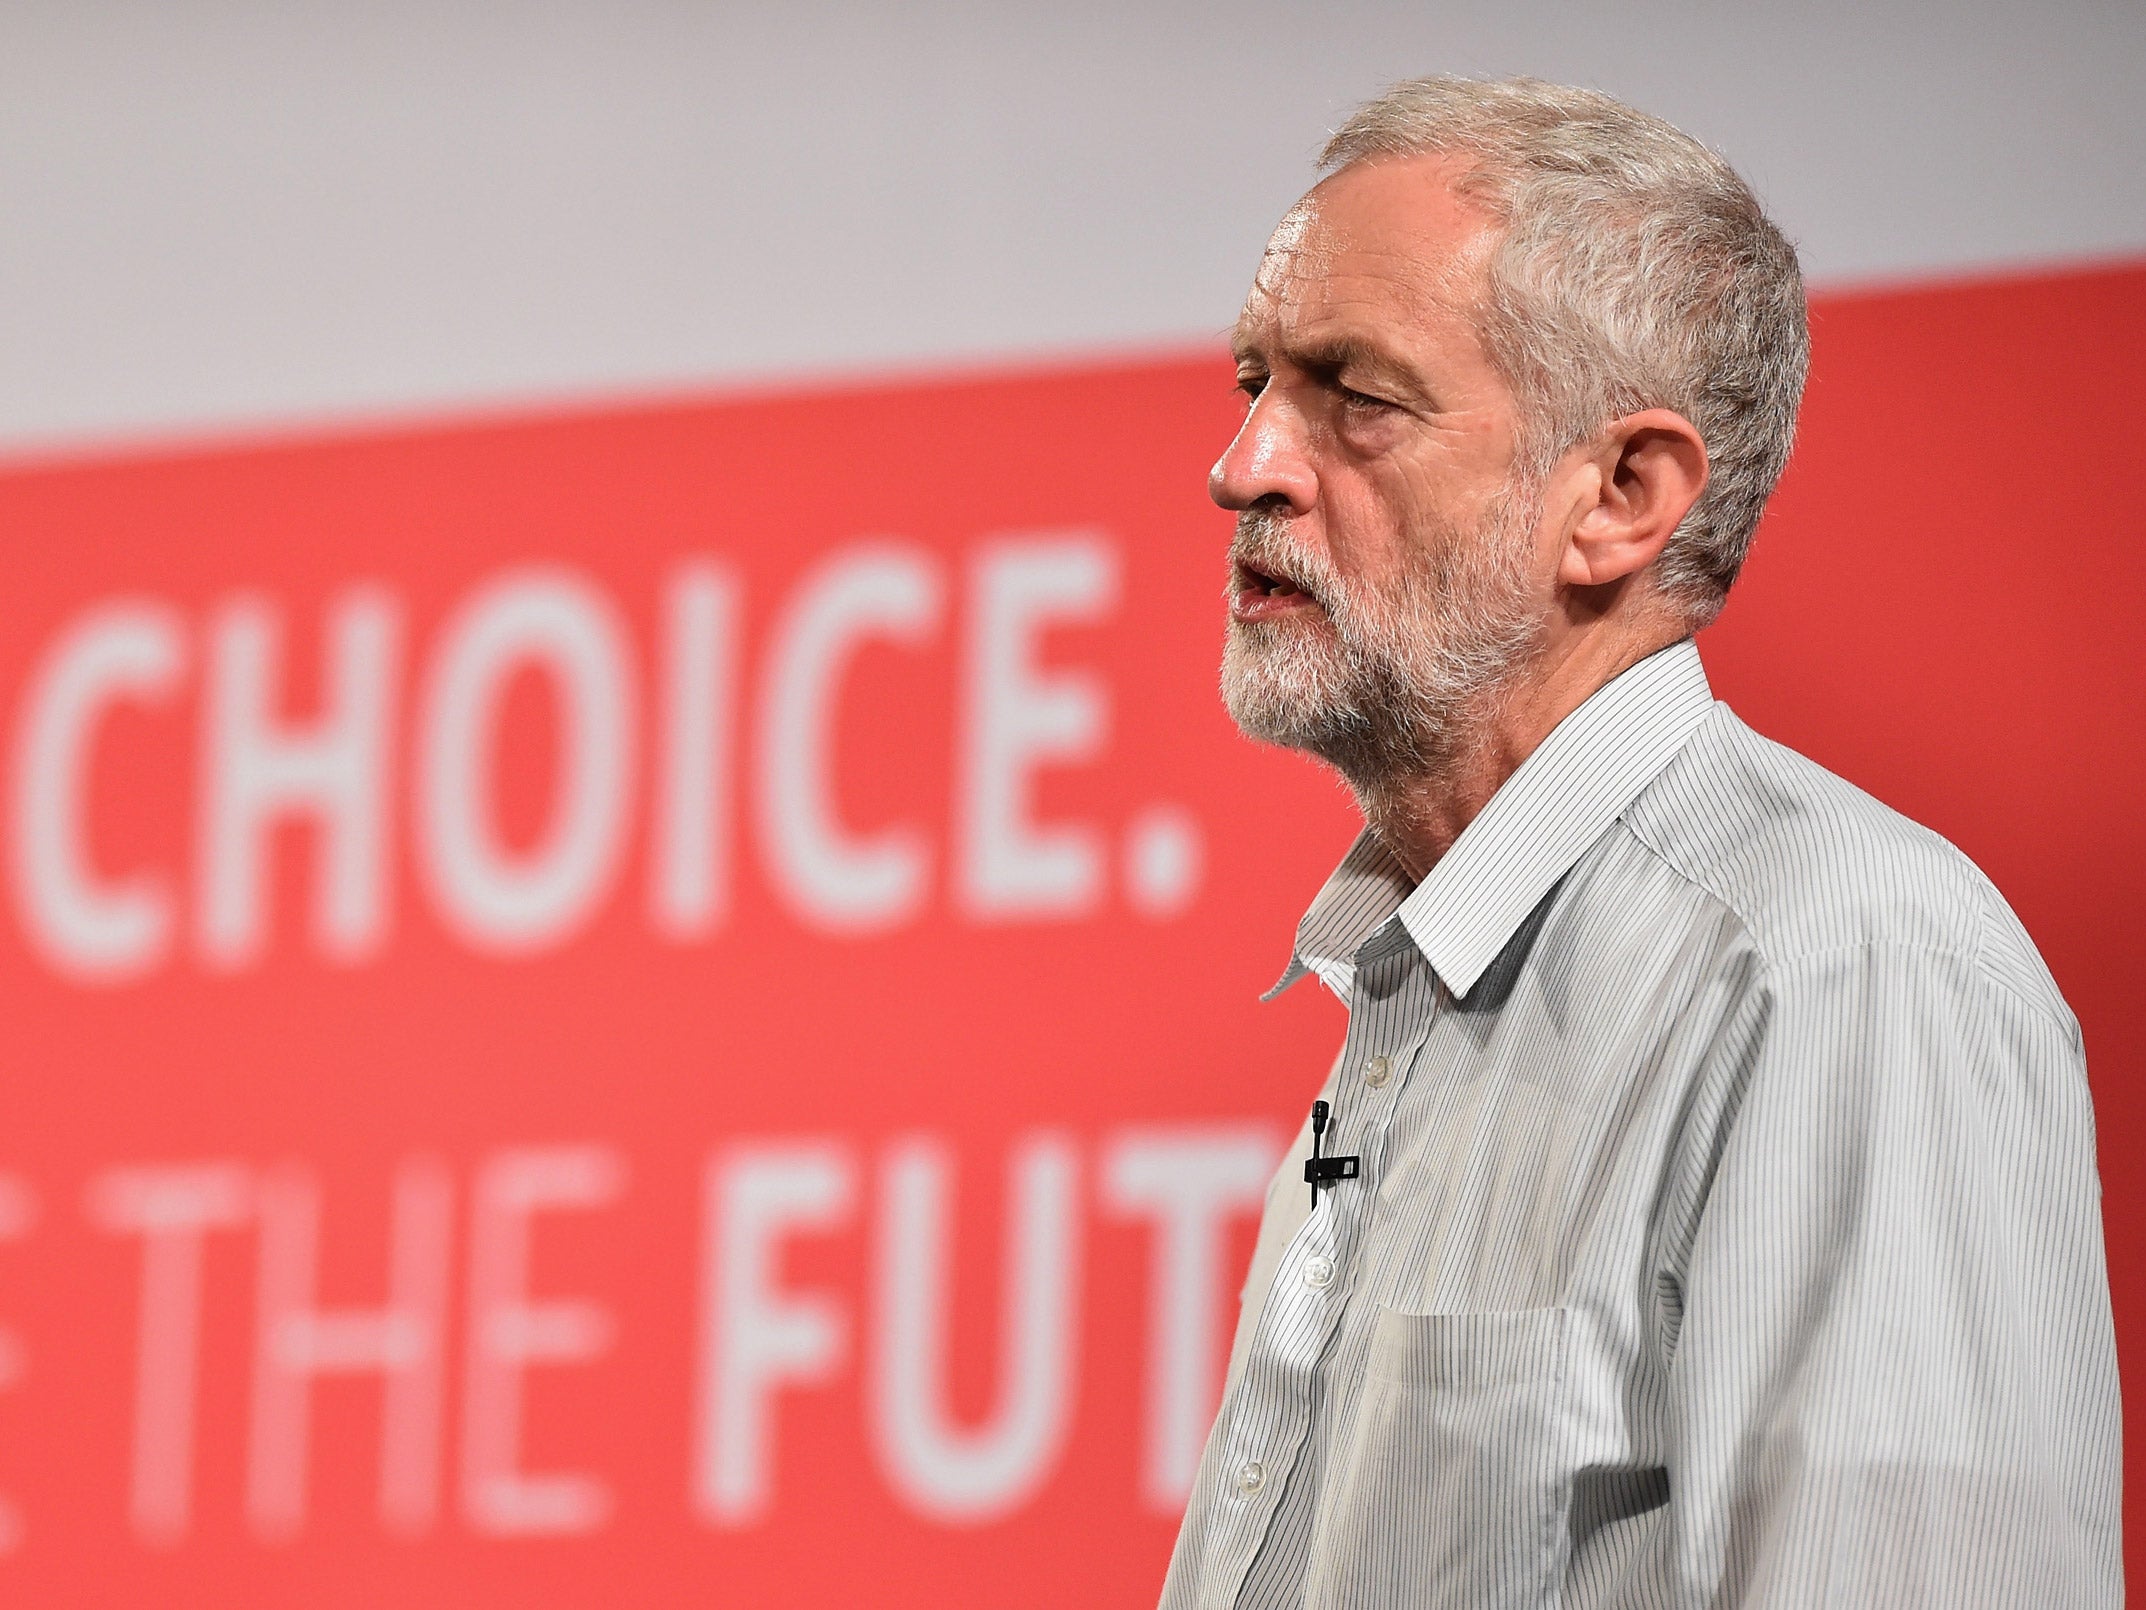 Jeremy Corbyn, the surprise frontrunner for next Labour leader